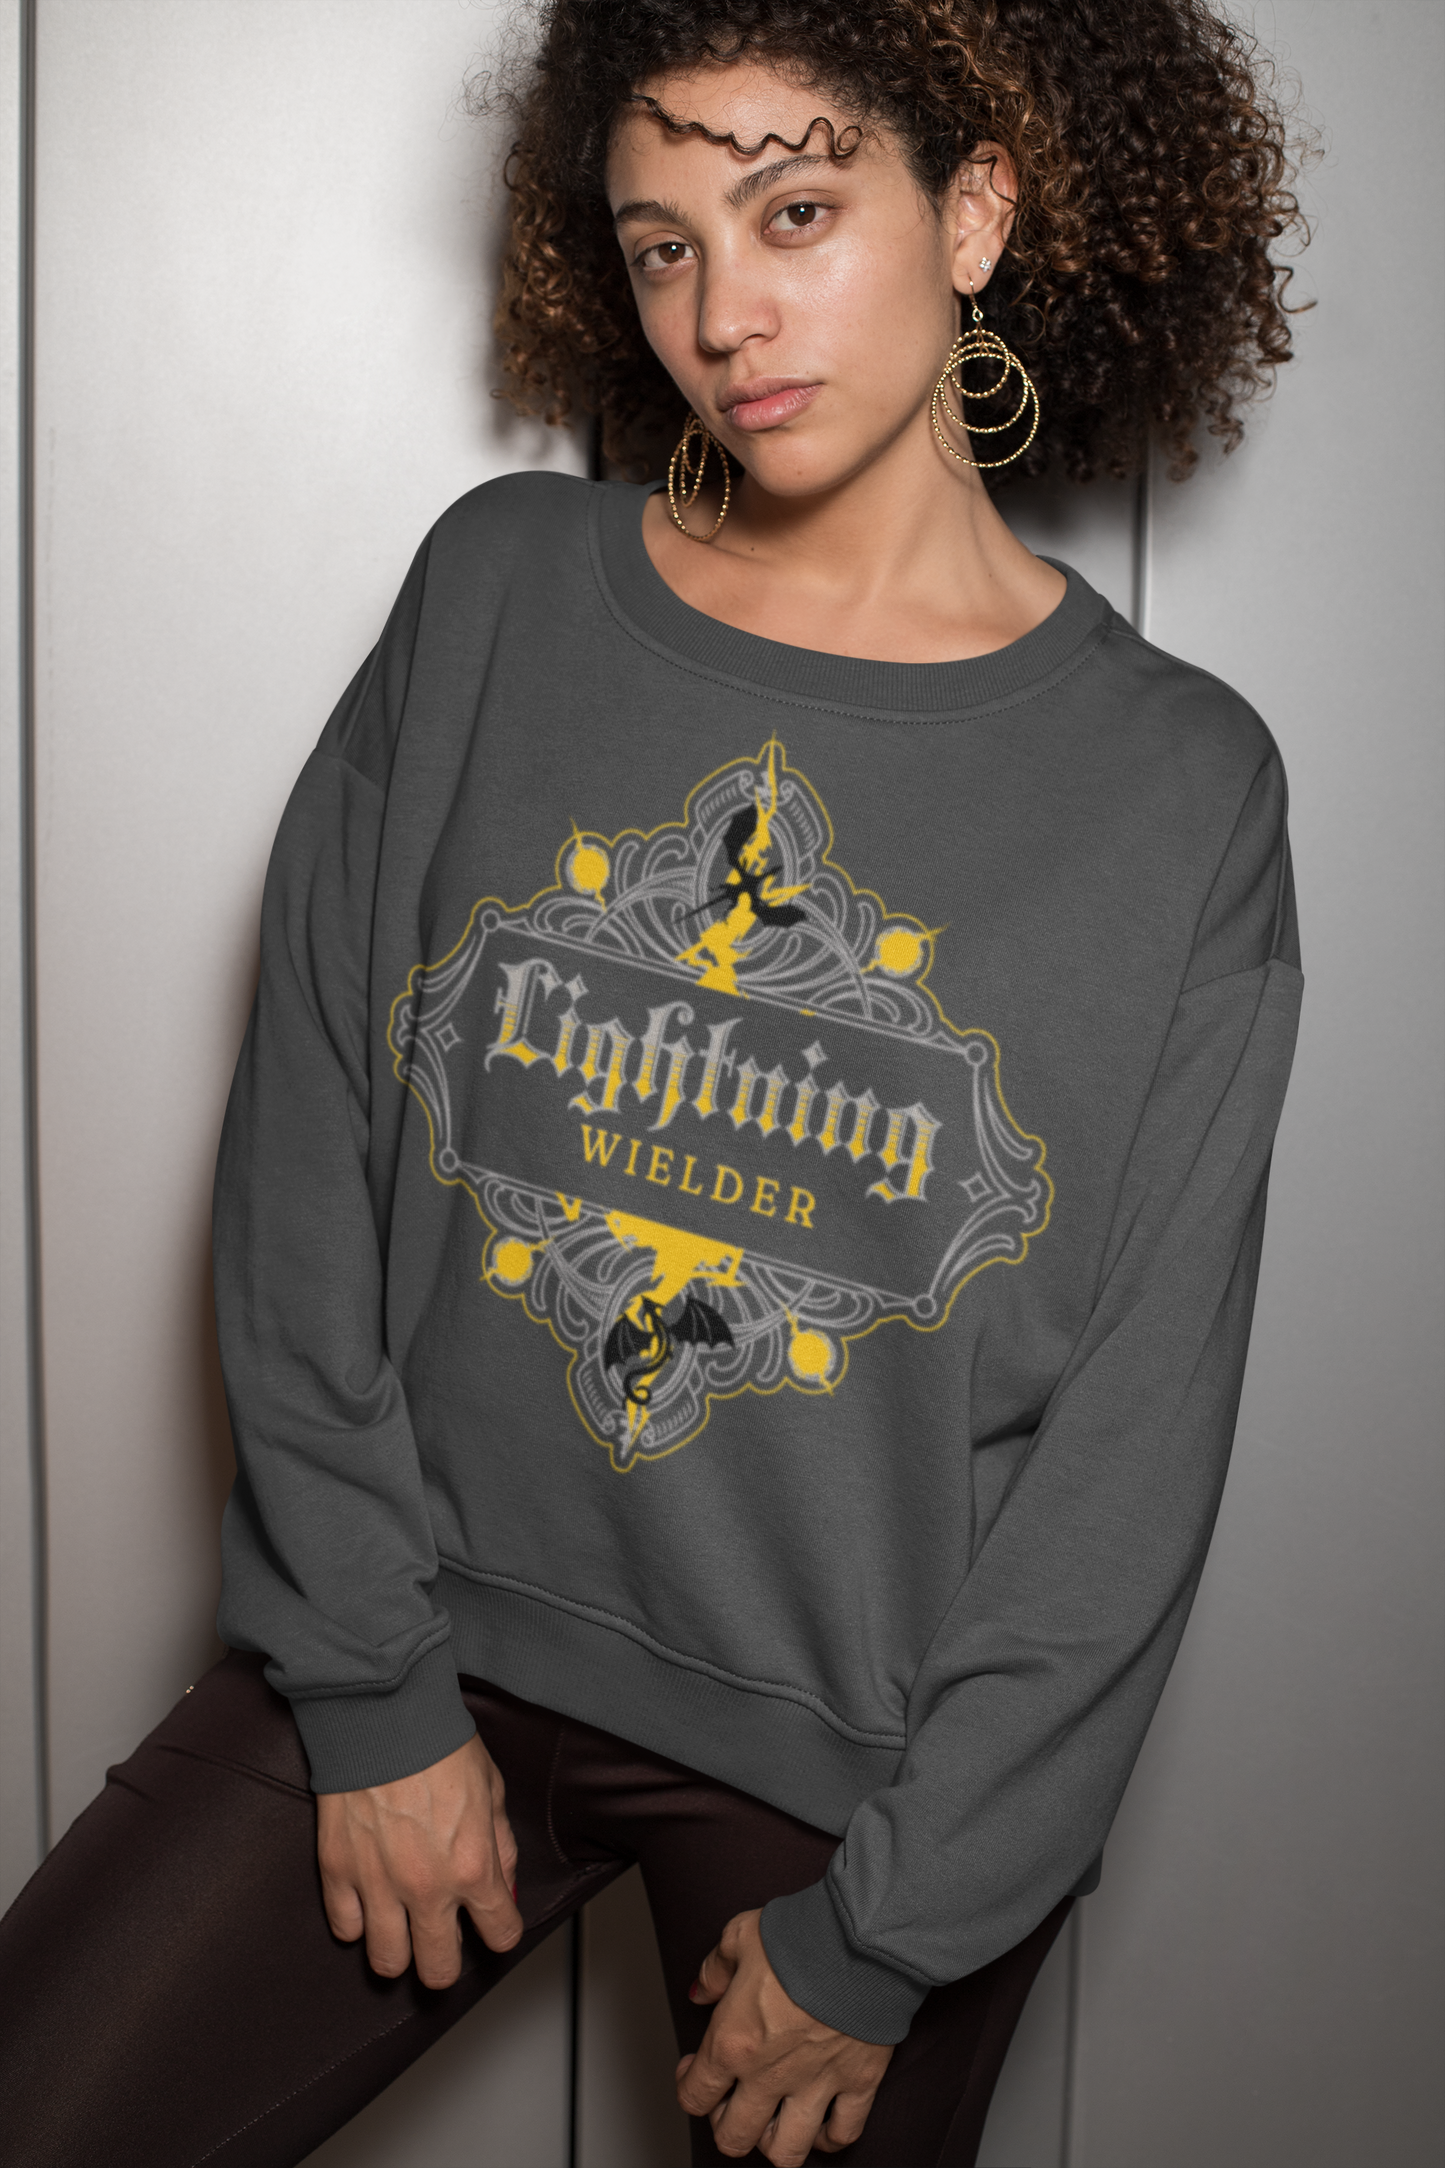 Lightning Wielder Sweatshirt - Officially Licensed Fourth Wing by Rebecca Yarros Merchandise